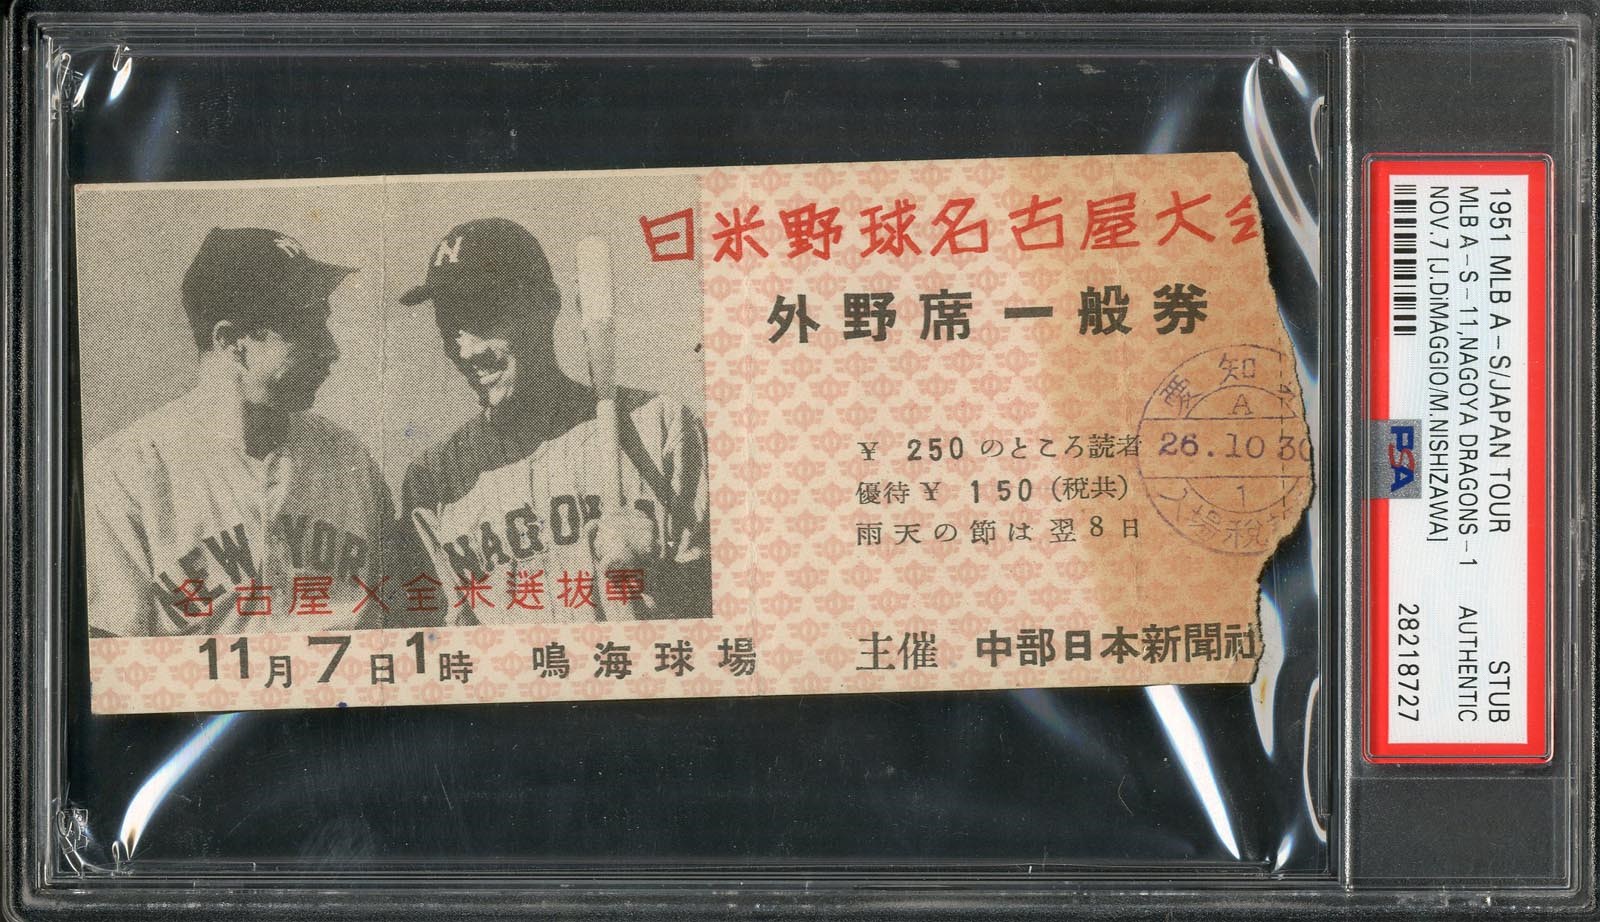 Sports Tickets and Programs - Joe DiMaggio 1951 MLB All Stars Japan Tour Ticket Stub